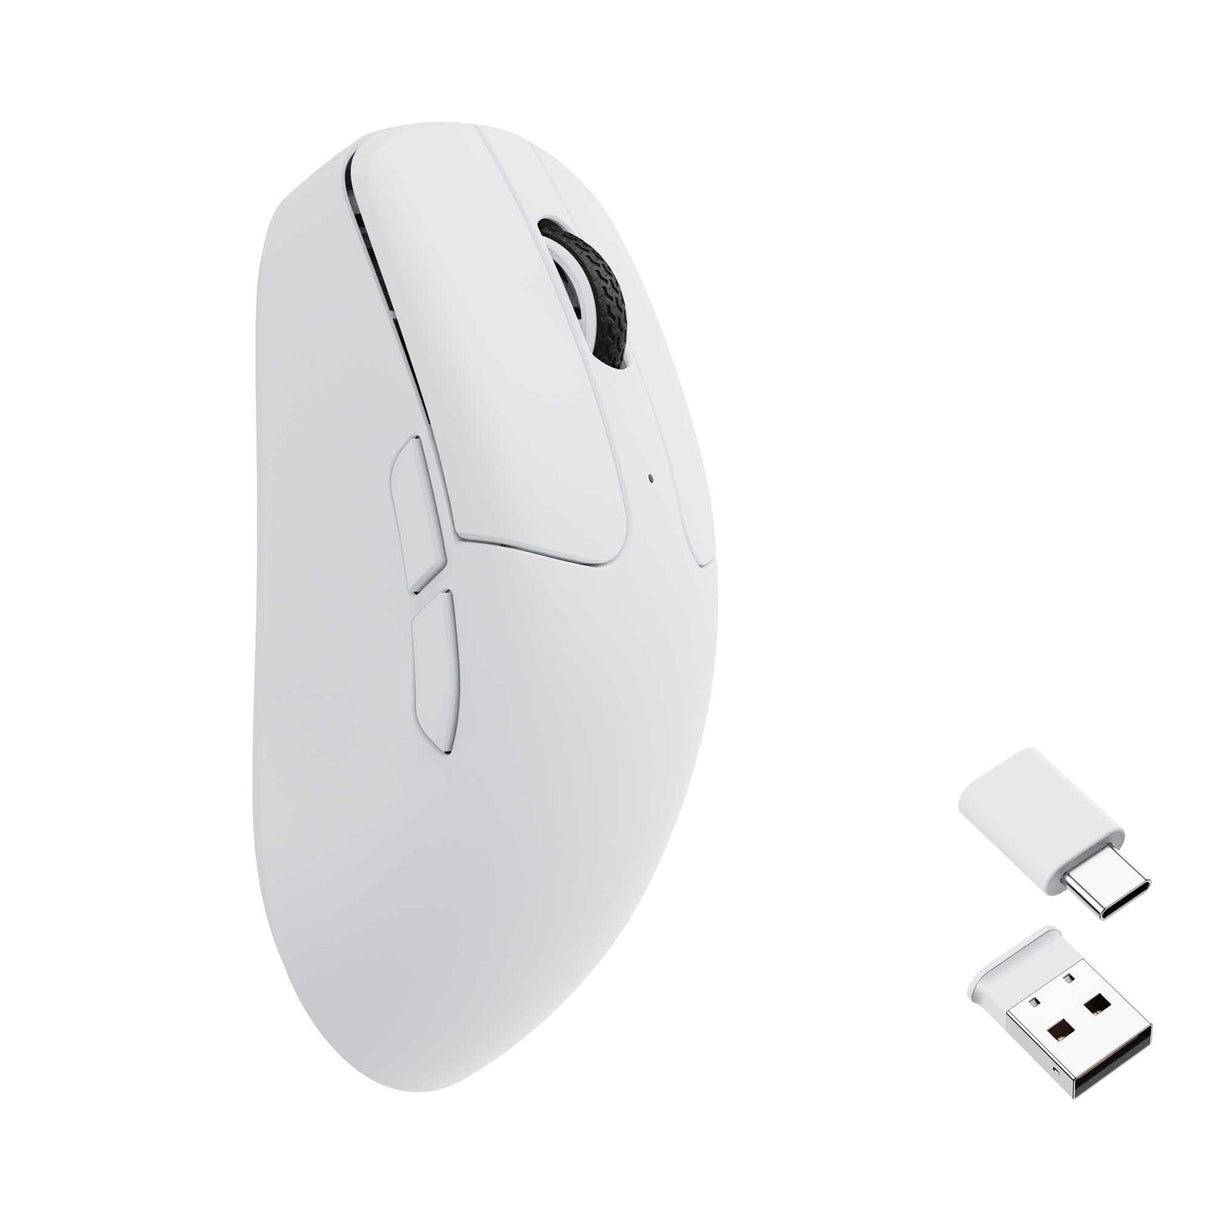 Mini souris sans fil Keychron M2